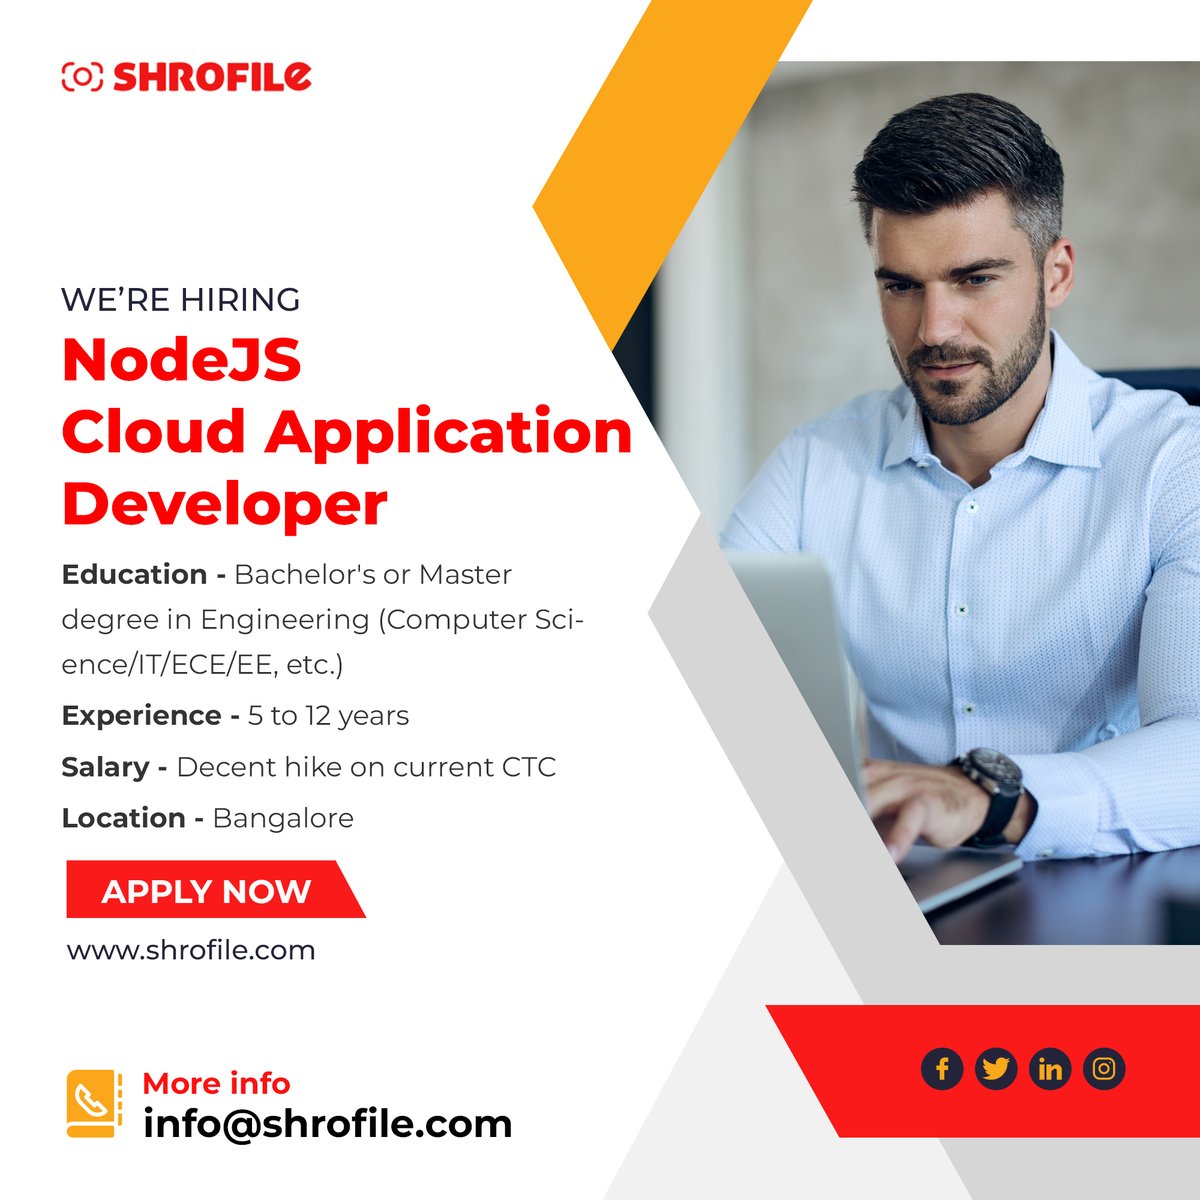 📢 We're Hiring! 🌟 NodeJS Cloud Application Developer
🚀 Apply now - shrofile.com/Submit-Your-Re…
✉️ info@shrofile.com

 #UrgentHiring  #CloudDeveloper #nodejsdeveloper #Javascript #javadeveloper #cloud #cloudcomputing #cloudapplications #python #Javascript #javadeveloperjobs